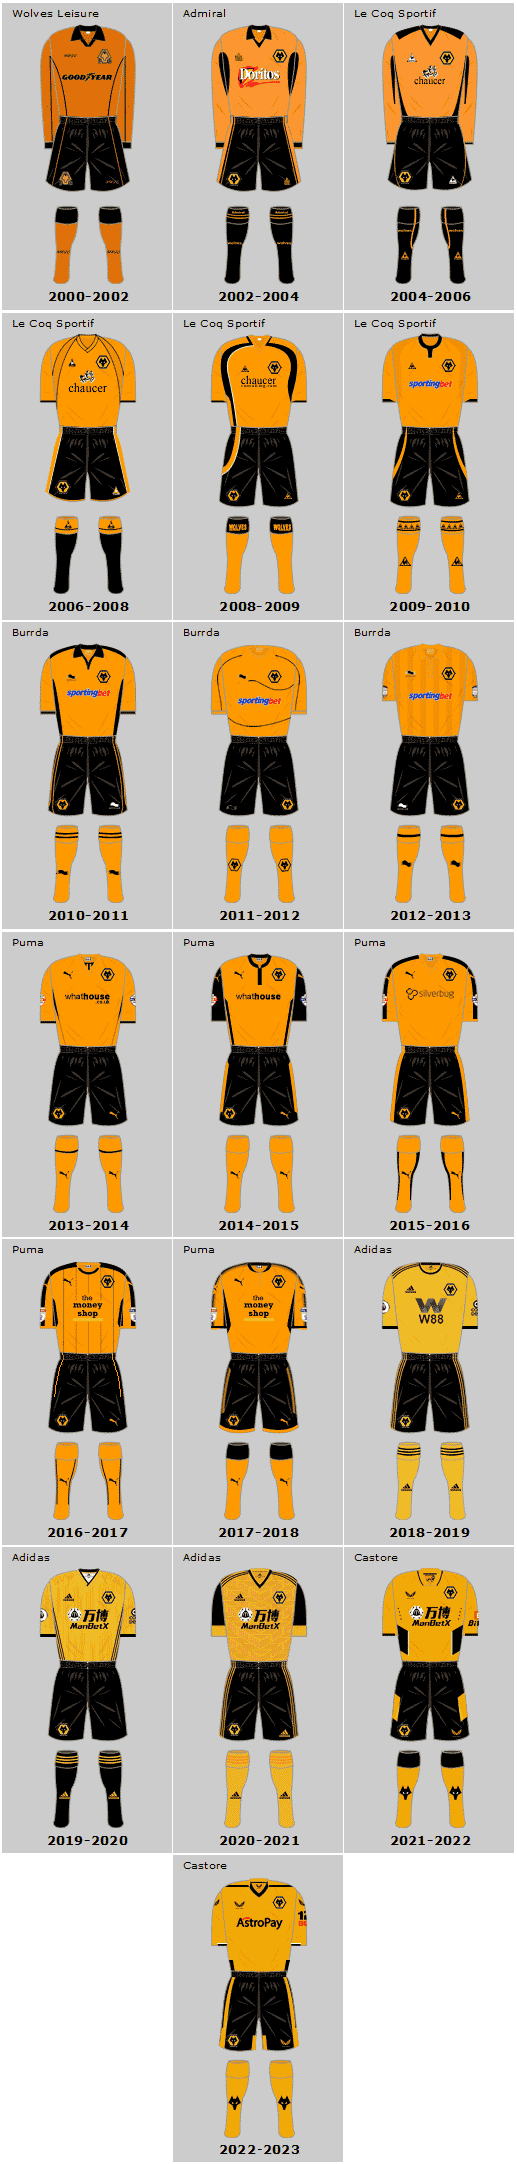 Wolverhampton Wanderers 21st Century Home Playing Kits